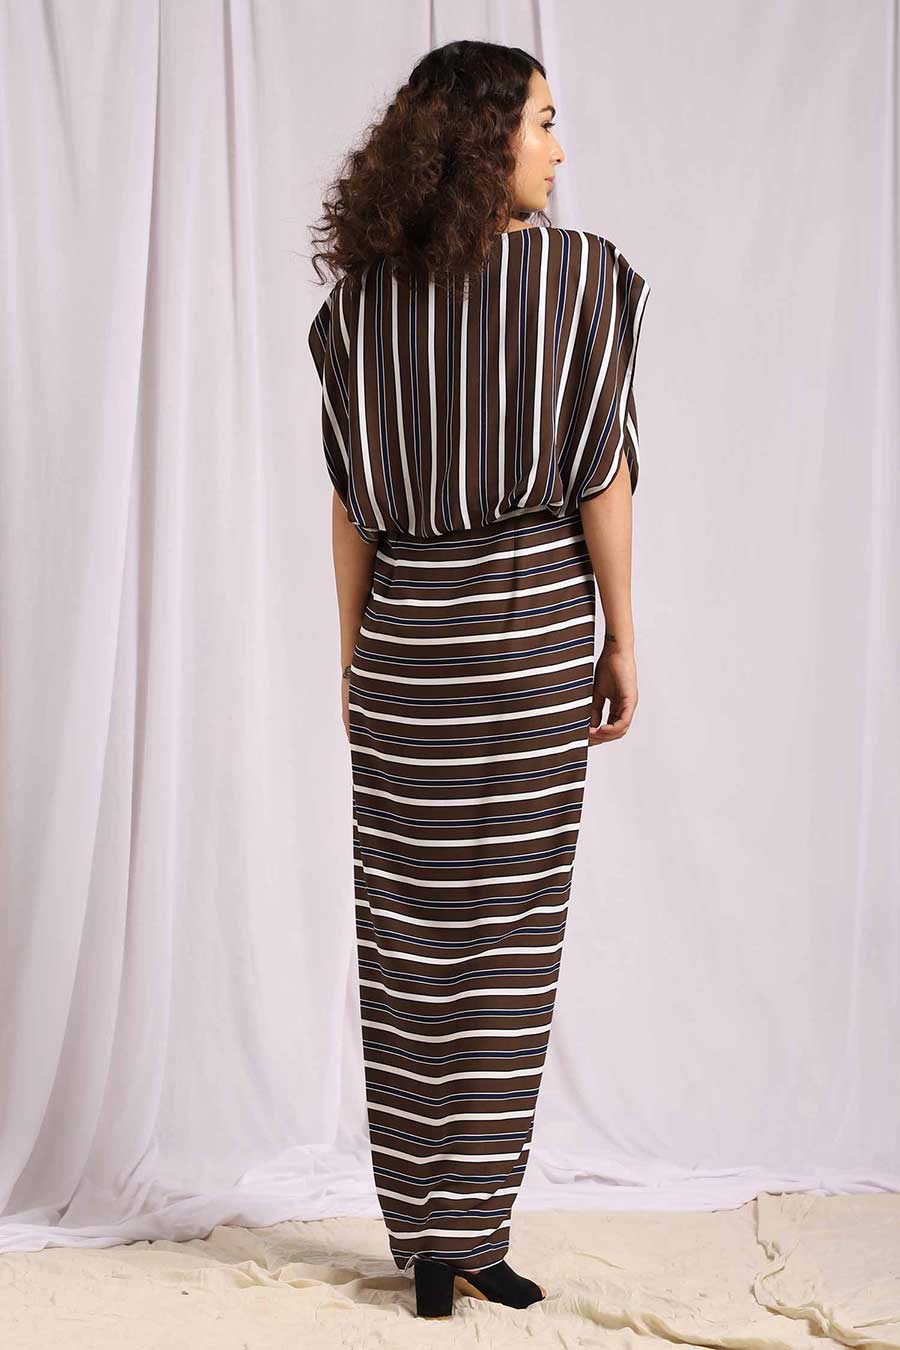 Brown Striped Layered Dress